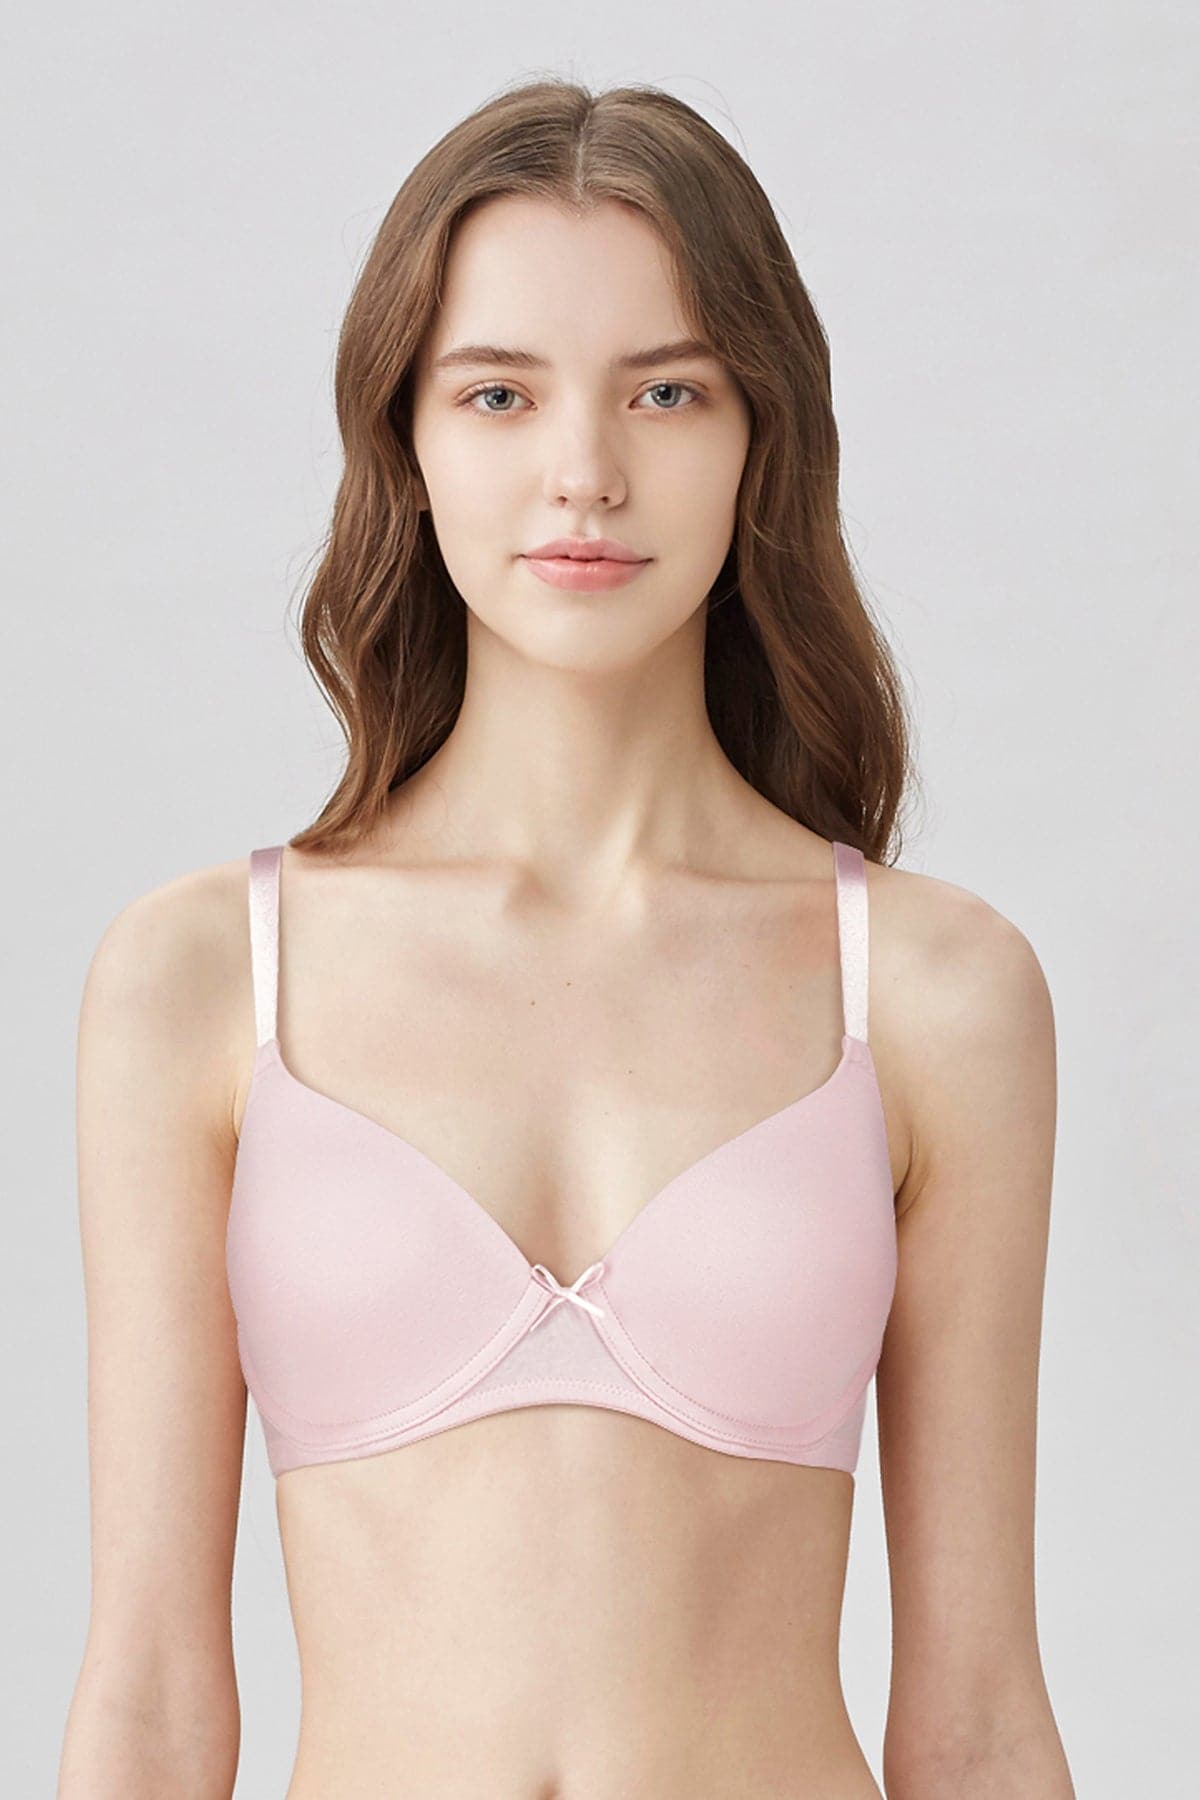 Buy Kylie Pink Teenage Girls Bras Underwear Thin Cup Younth Teen